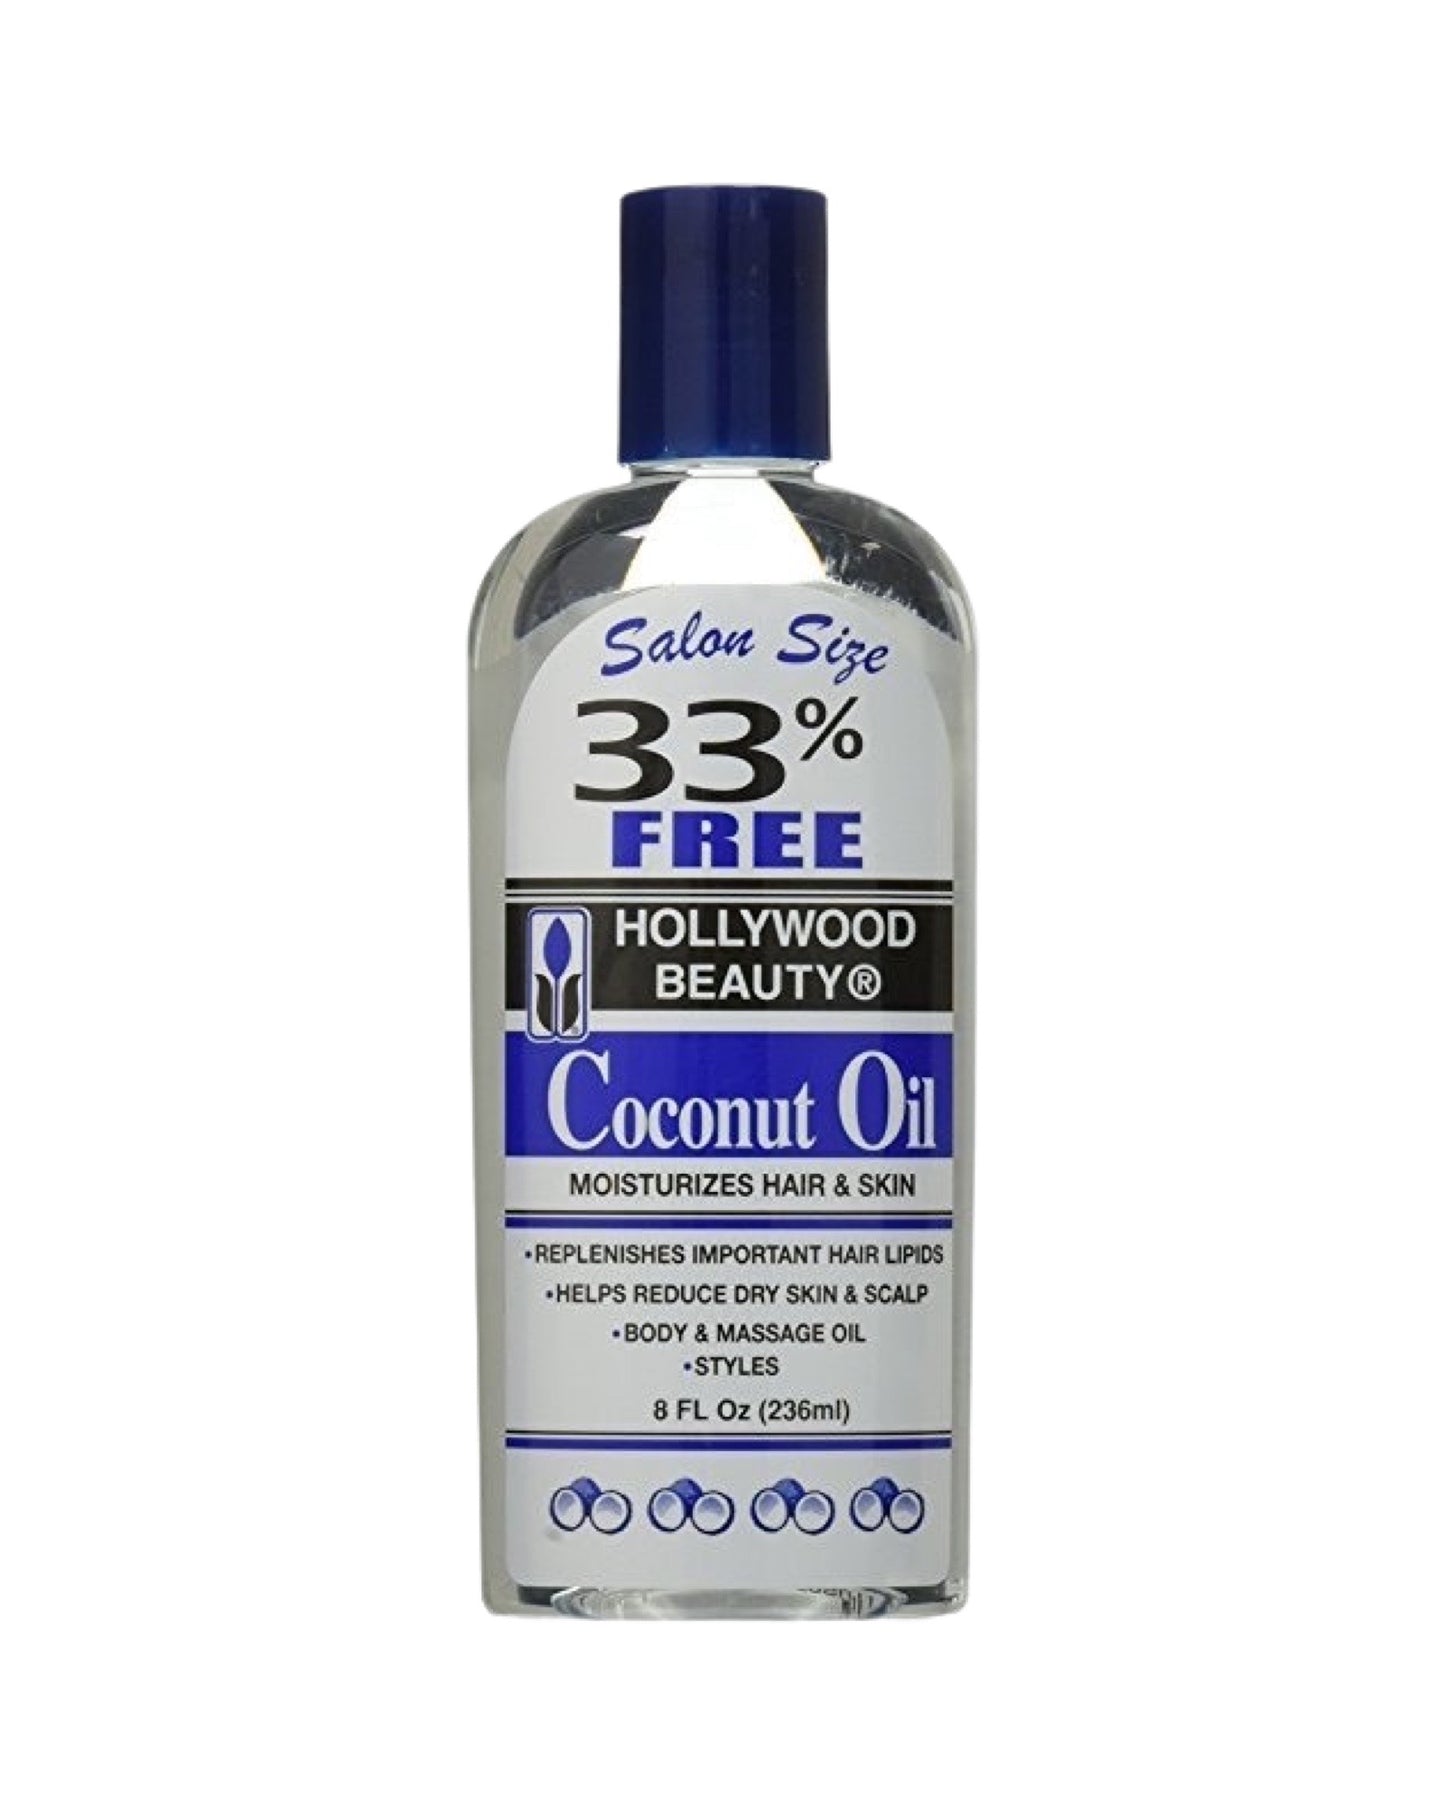 Salon Size 33% Free Hollywood Beauty Coconut Oil